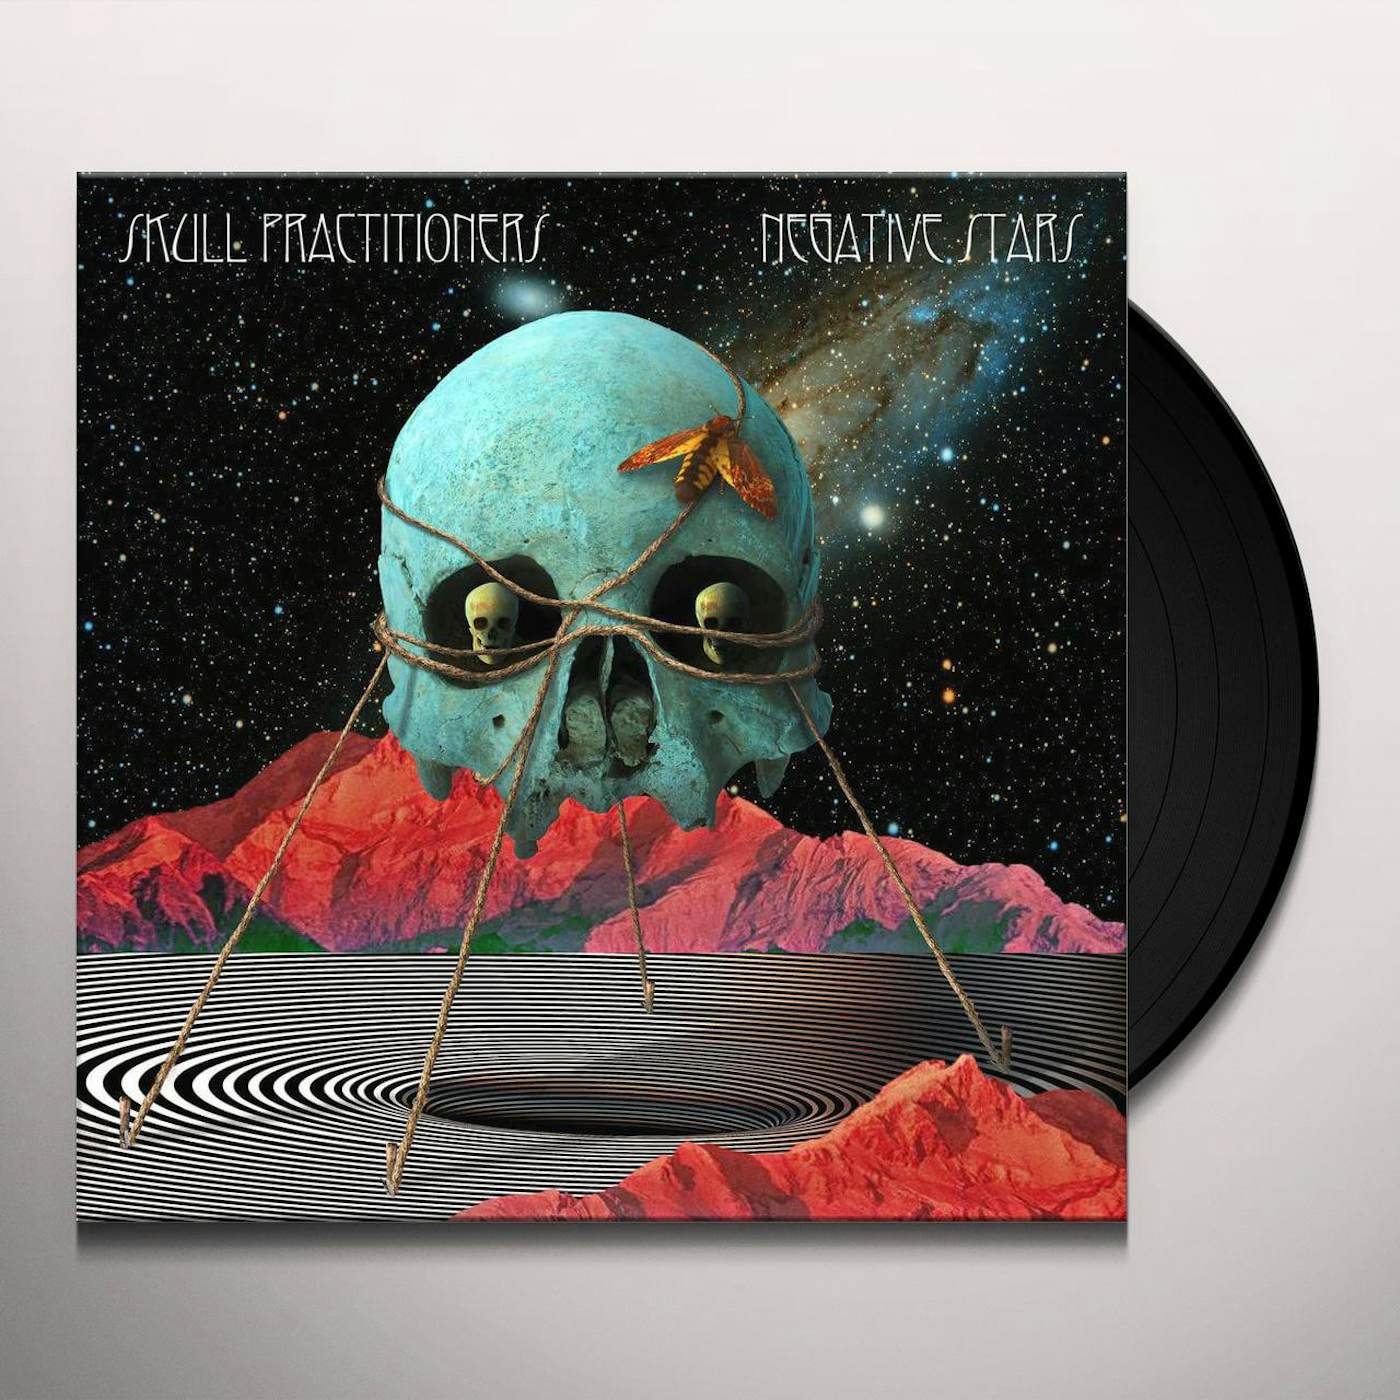 Skull Practitioners Negative Stars Vinyl Record